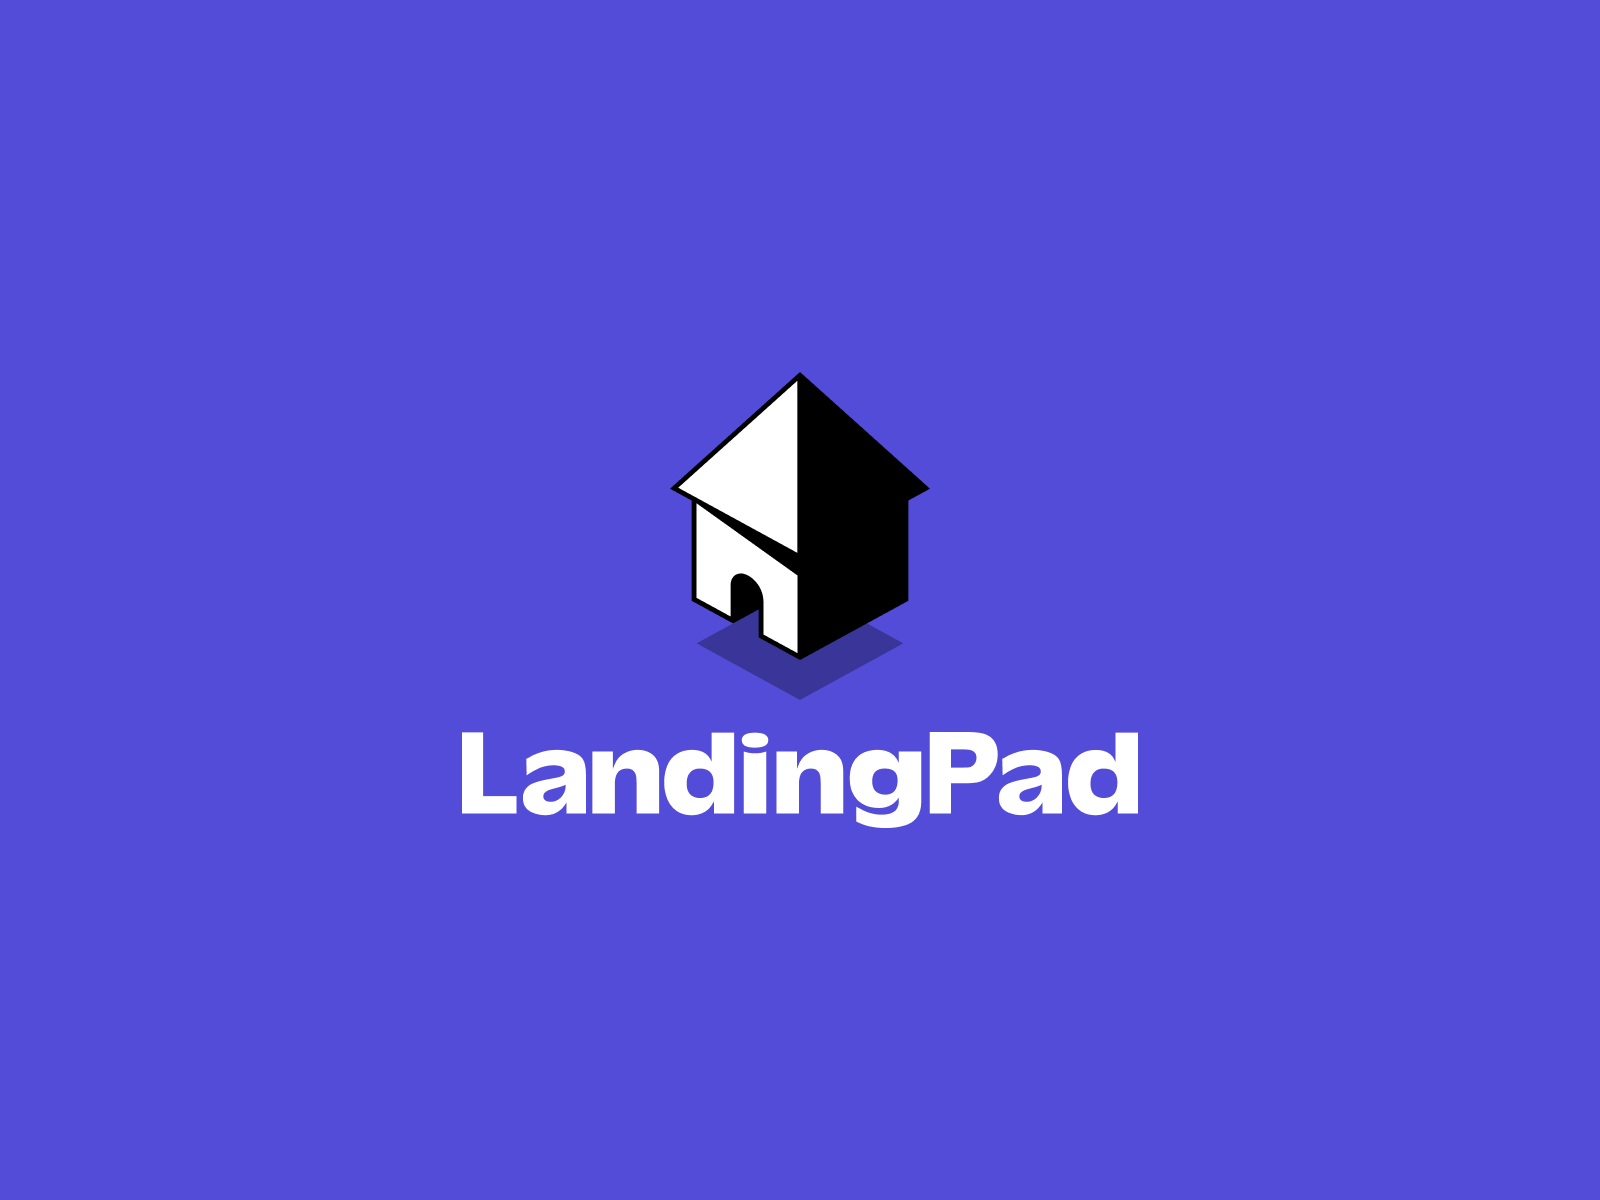 LandingPad branding